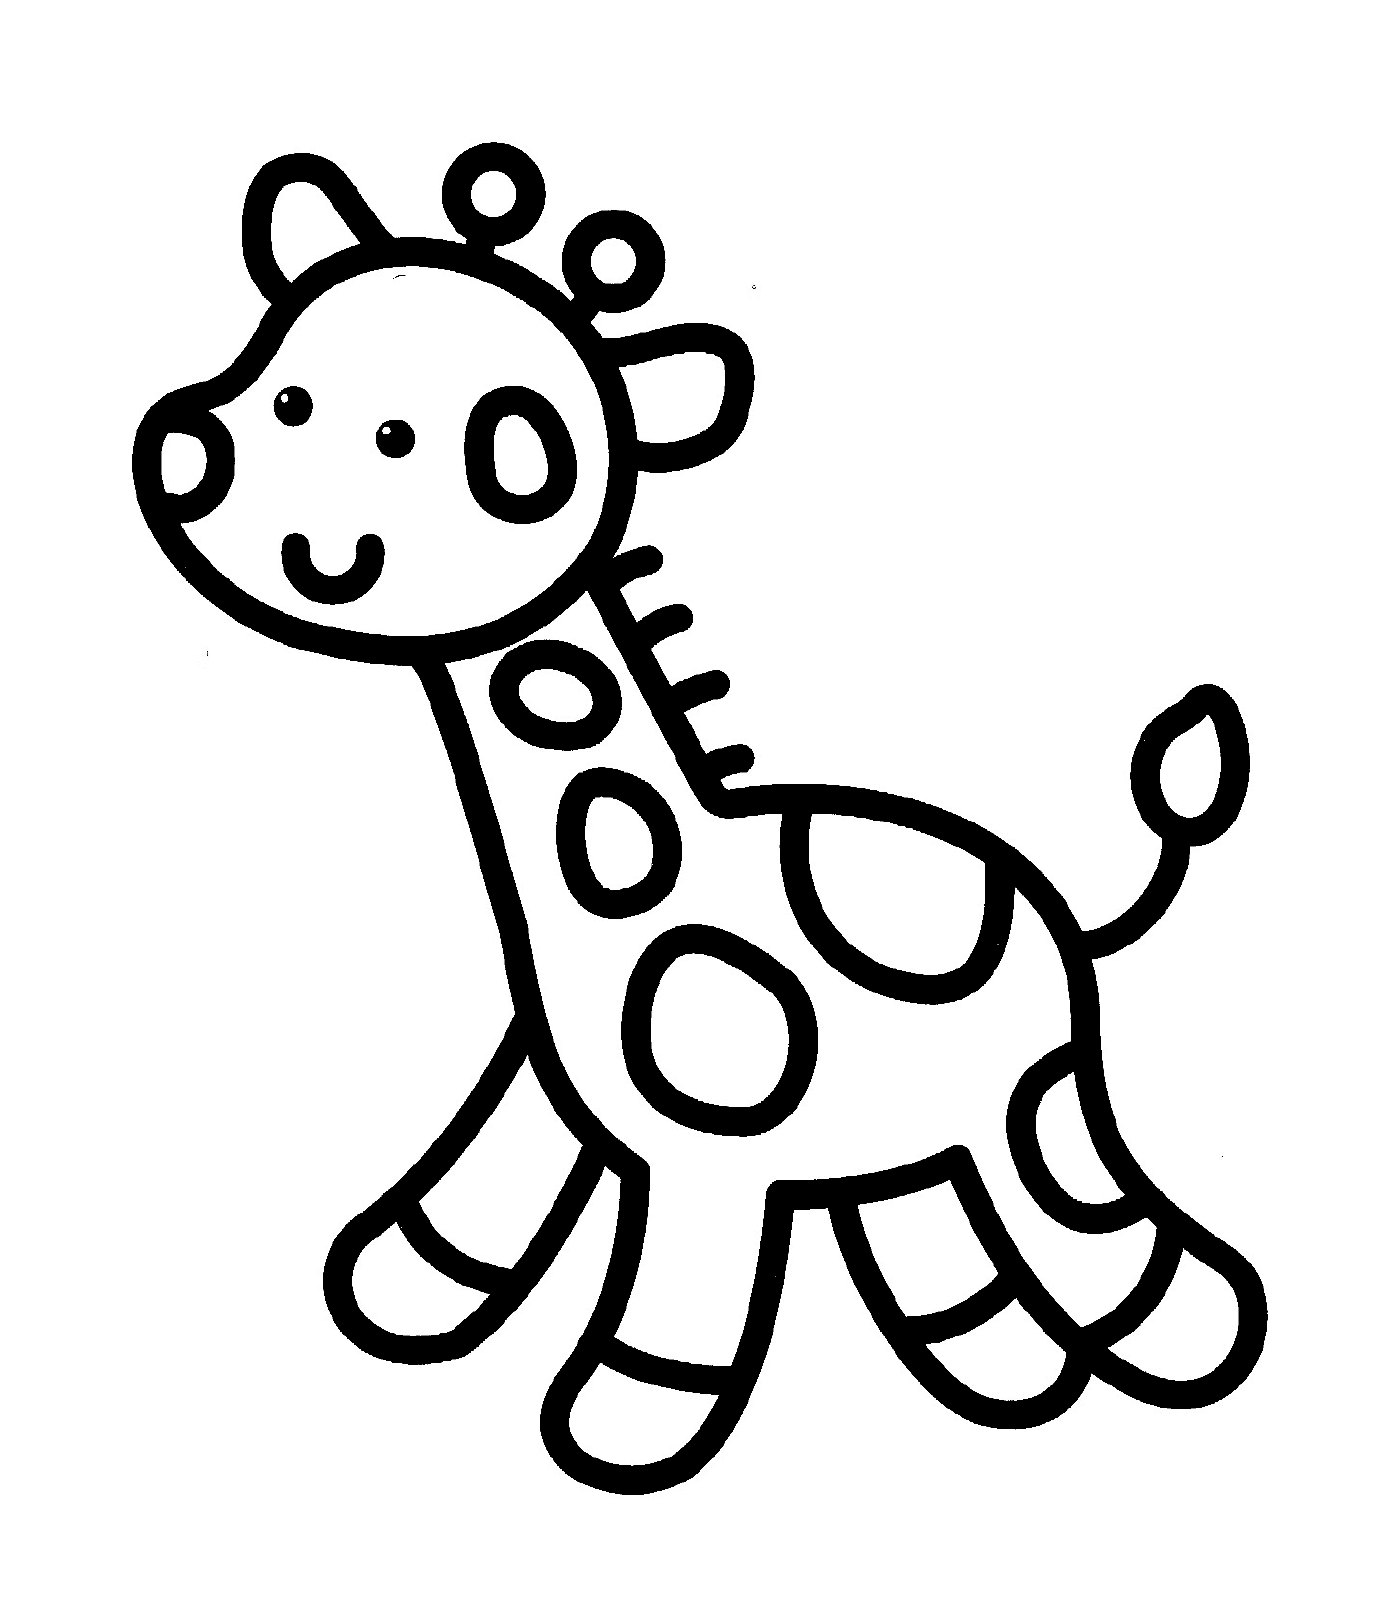  An easy to draw giraffe for kindergarten children 